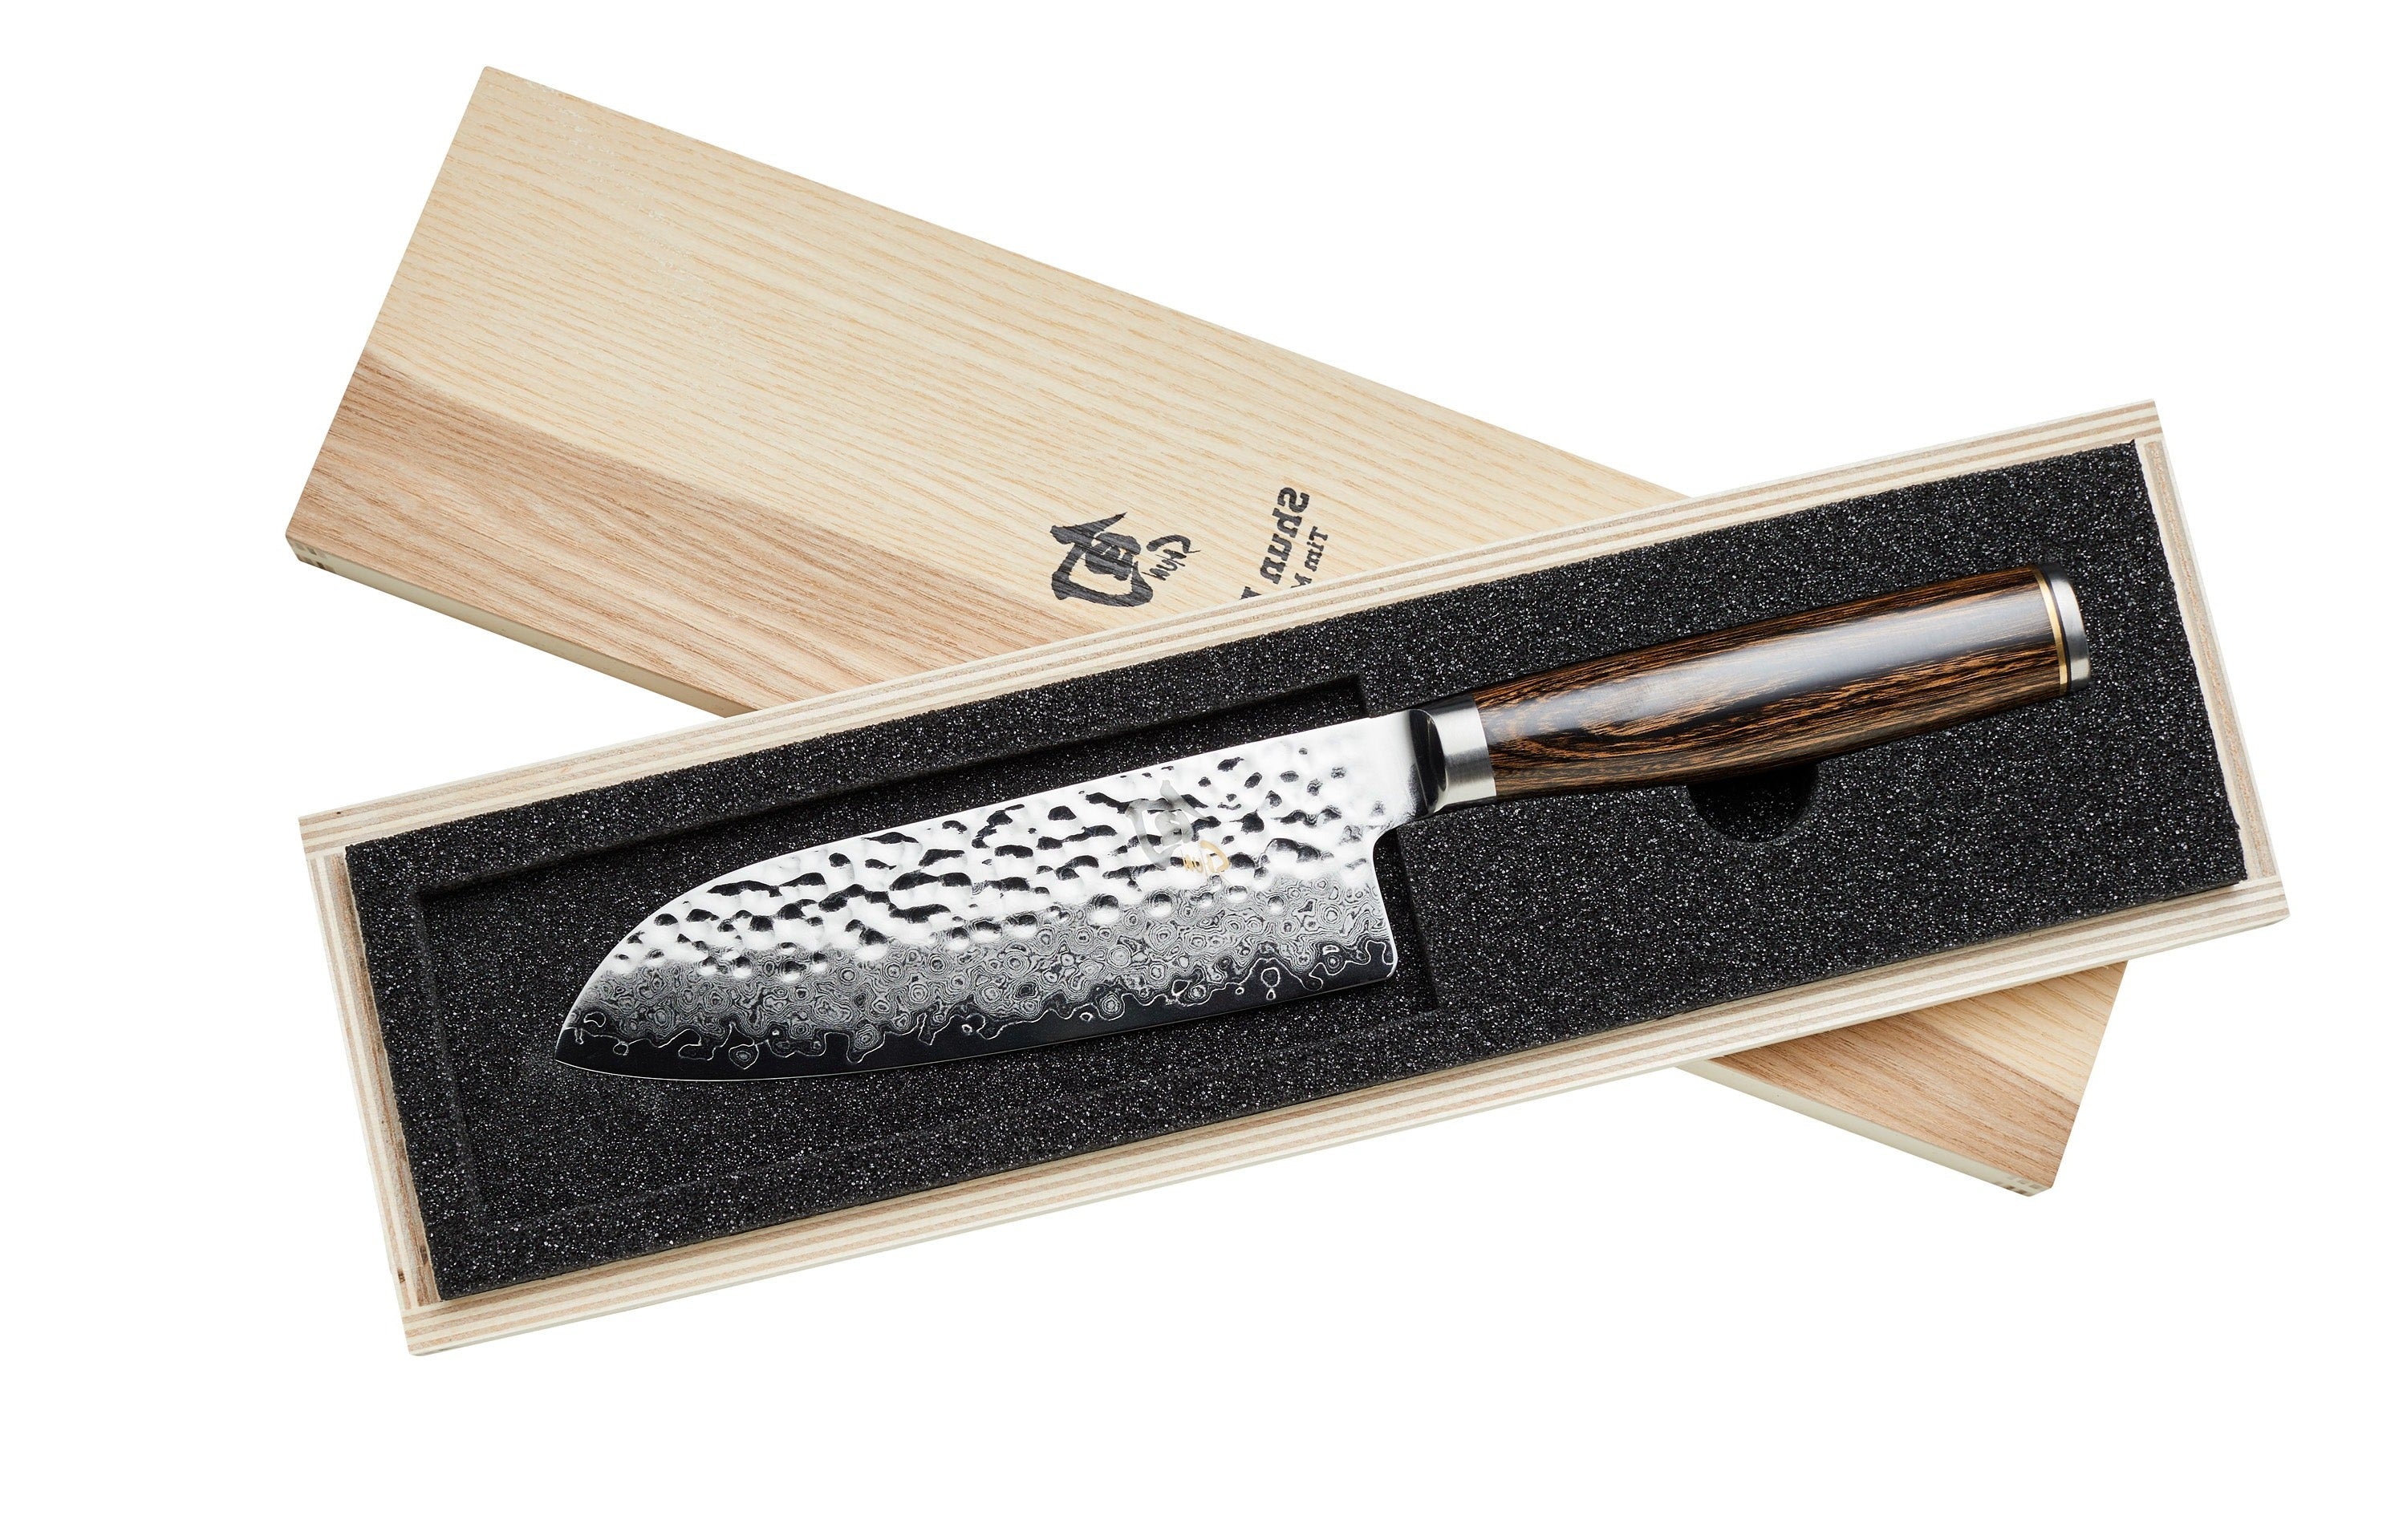 Billede af Kai - Shun Premier santoku kniv - 14 cm.